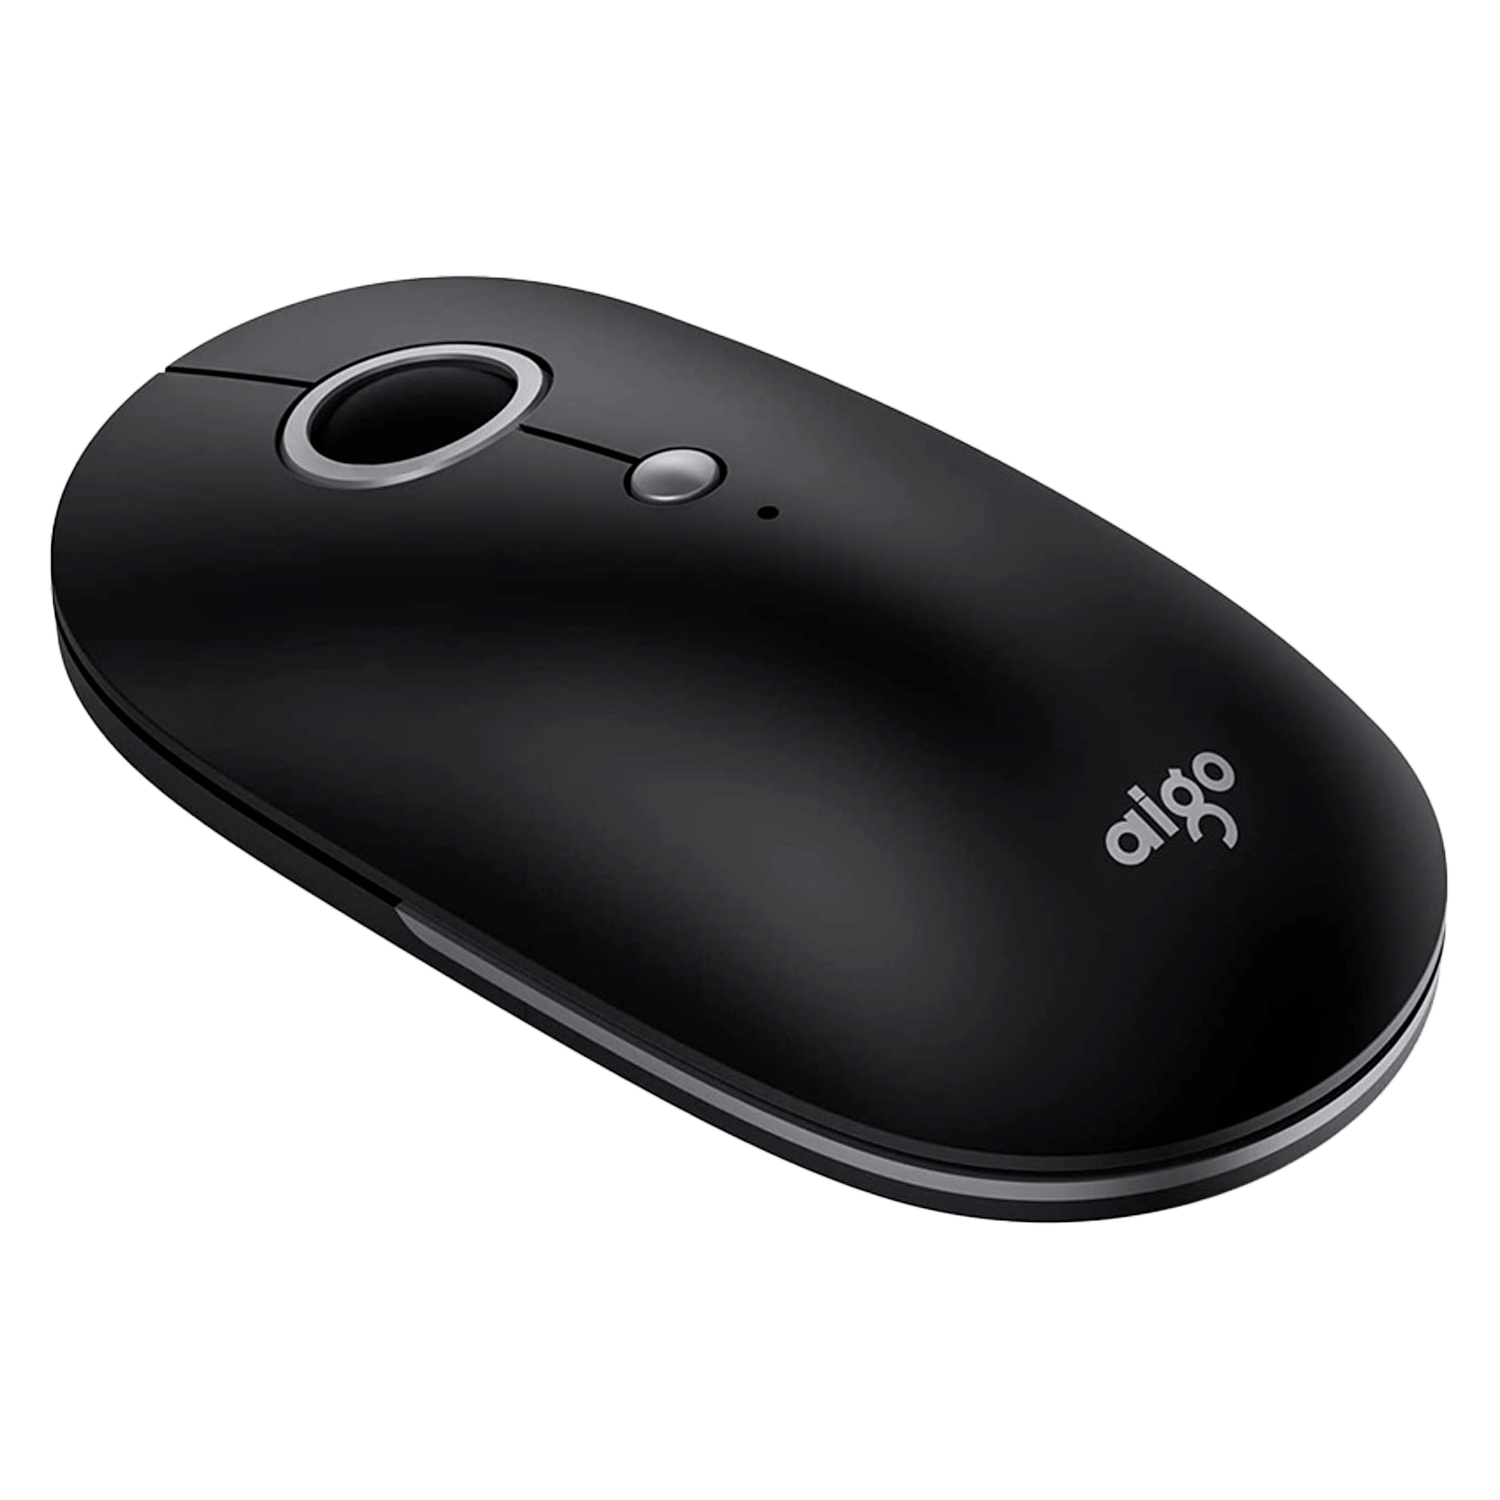 Mouse Aigo M300 Wireless - Preto